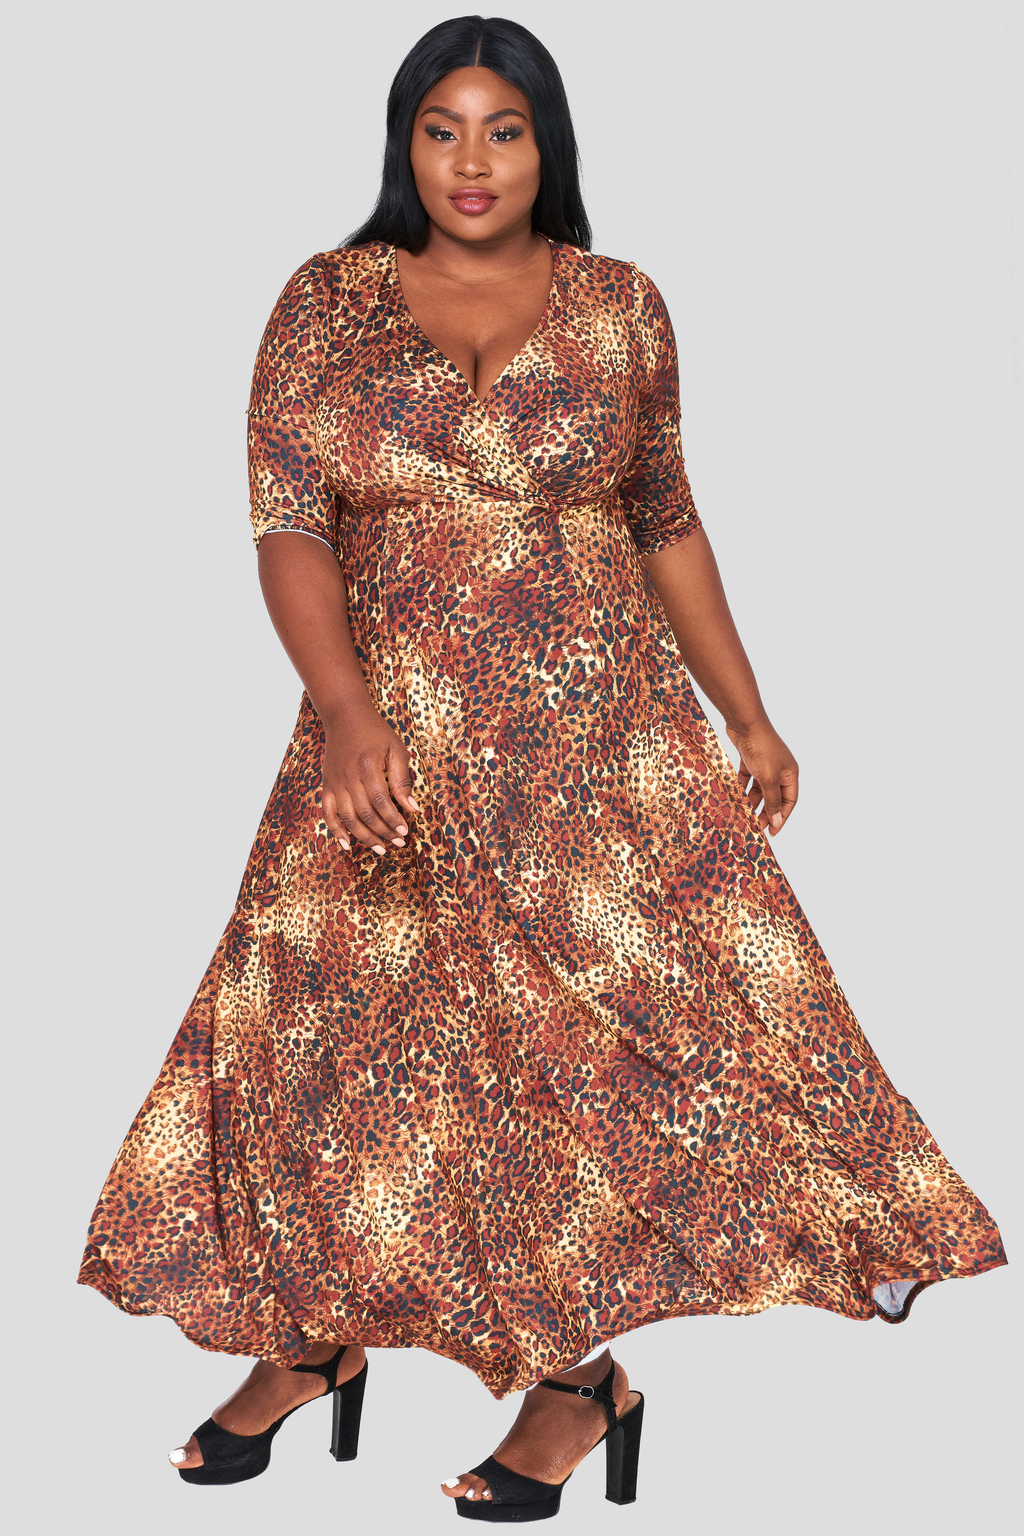 Leopard print maxi dress plus size clothing - Fashion Book